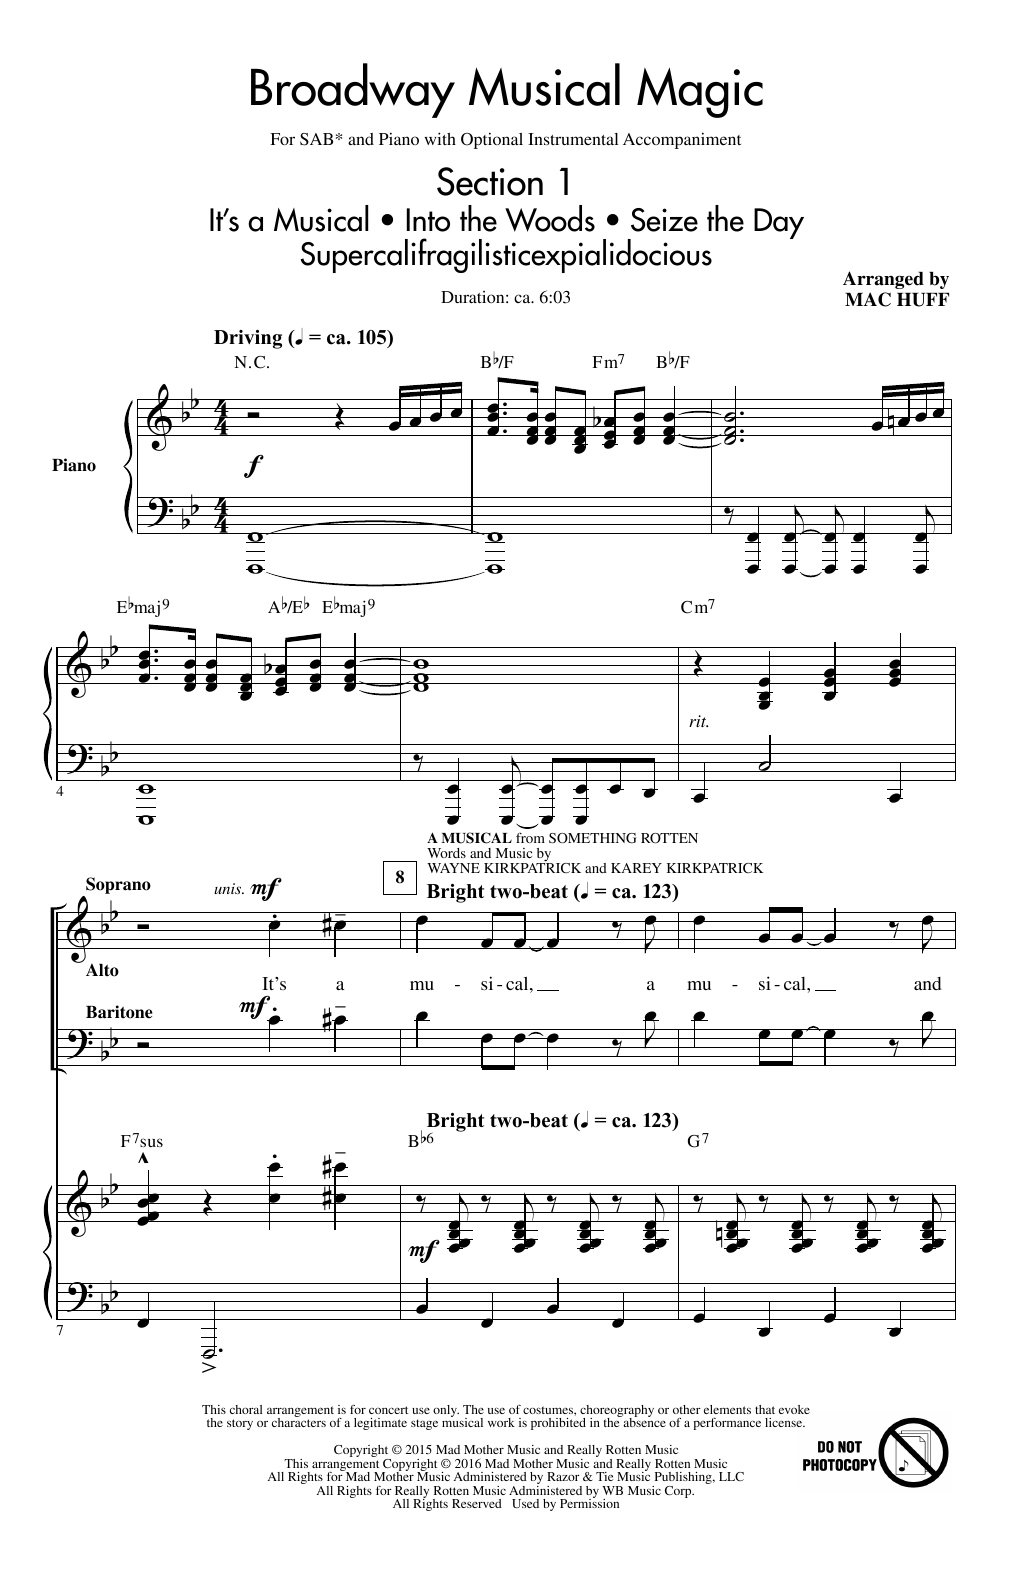 Mac Huff Broadway Musical Magic sheet music notes and chords arranged for SATB Choir